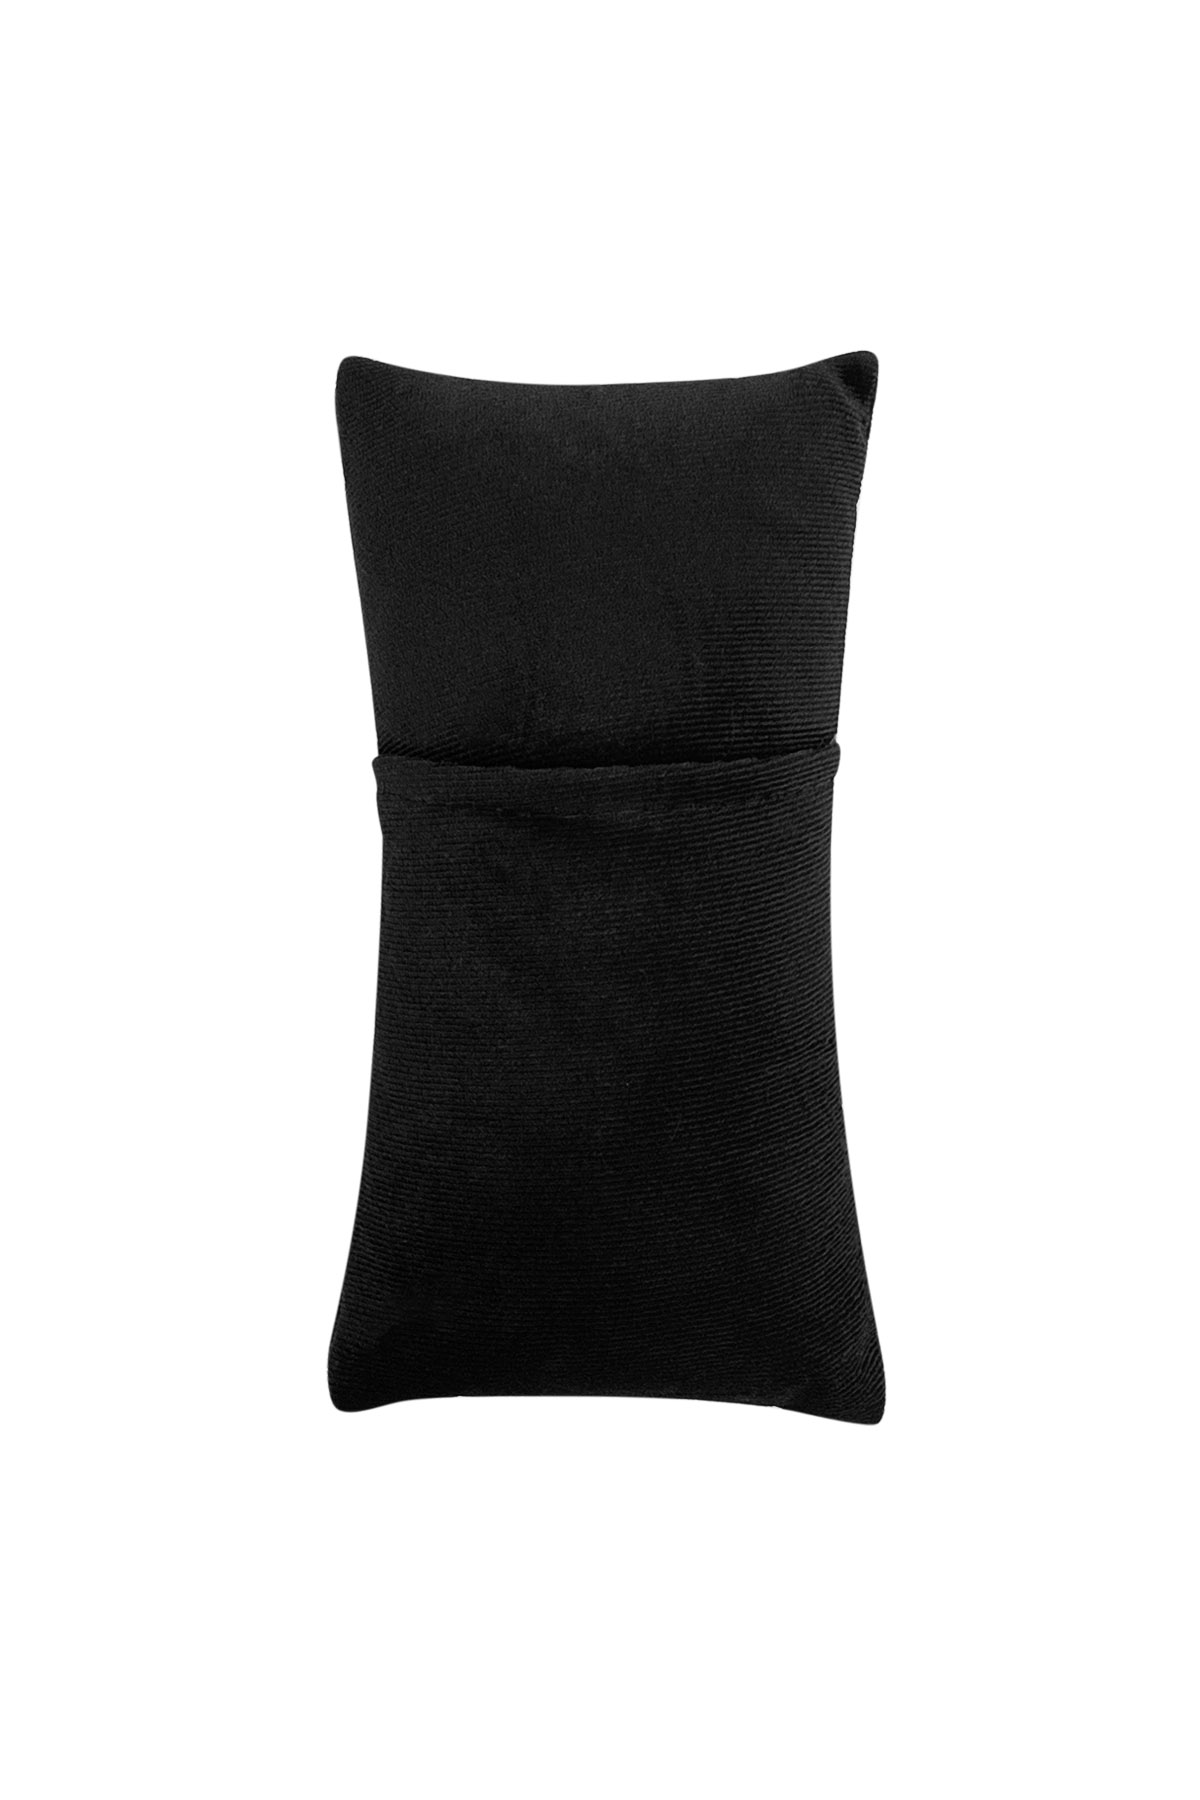 Simple bracelets cushion display - black  Picture2